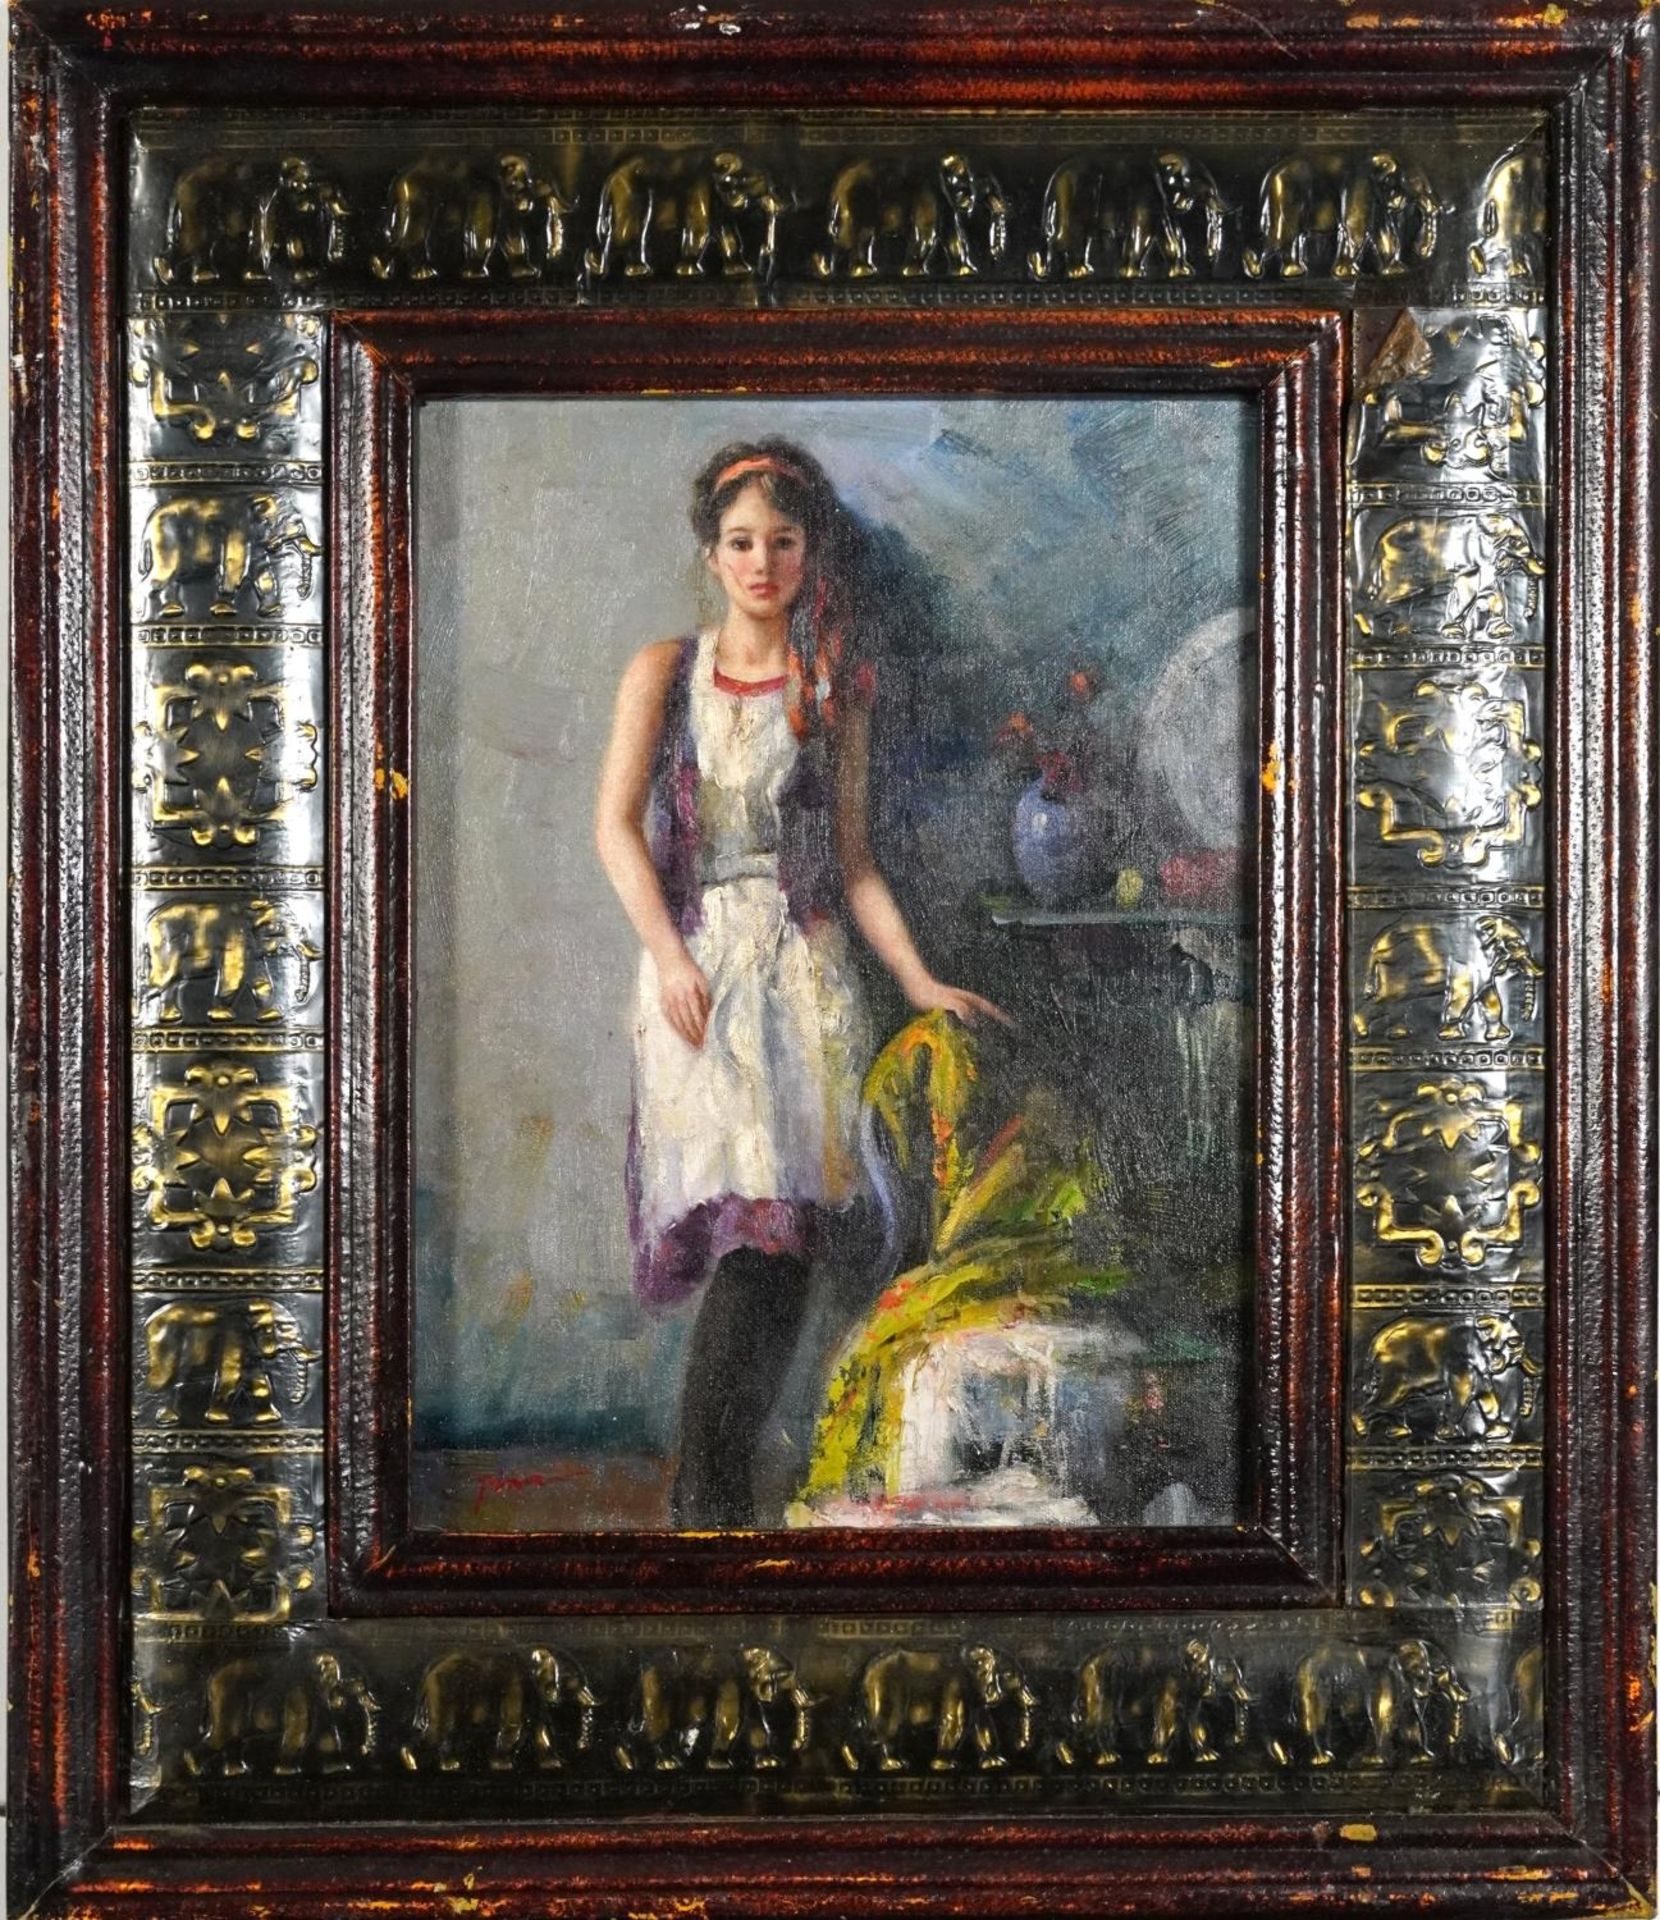 Manner of Pino Daeni - Female beside flowers, Italian school oil on board, housed in a frame - Image 2 of 4